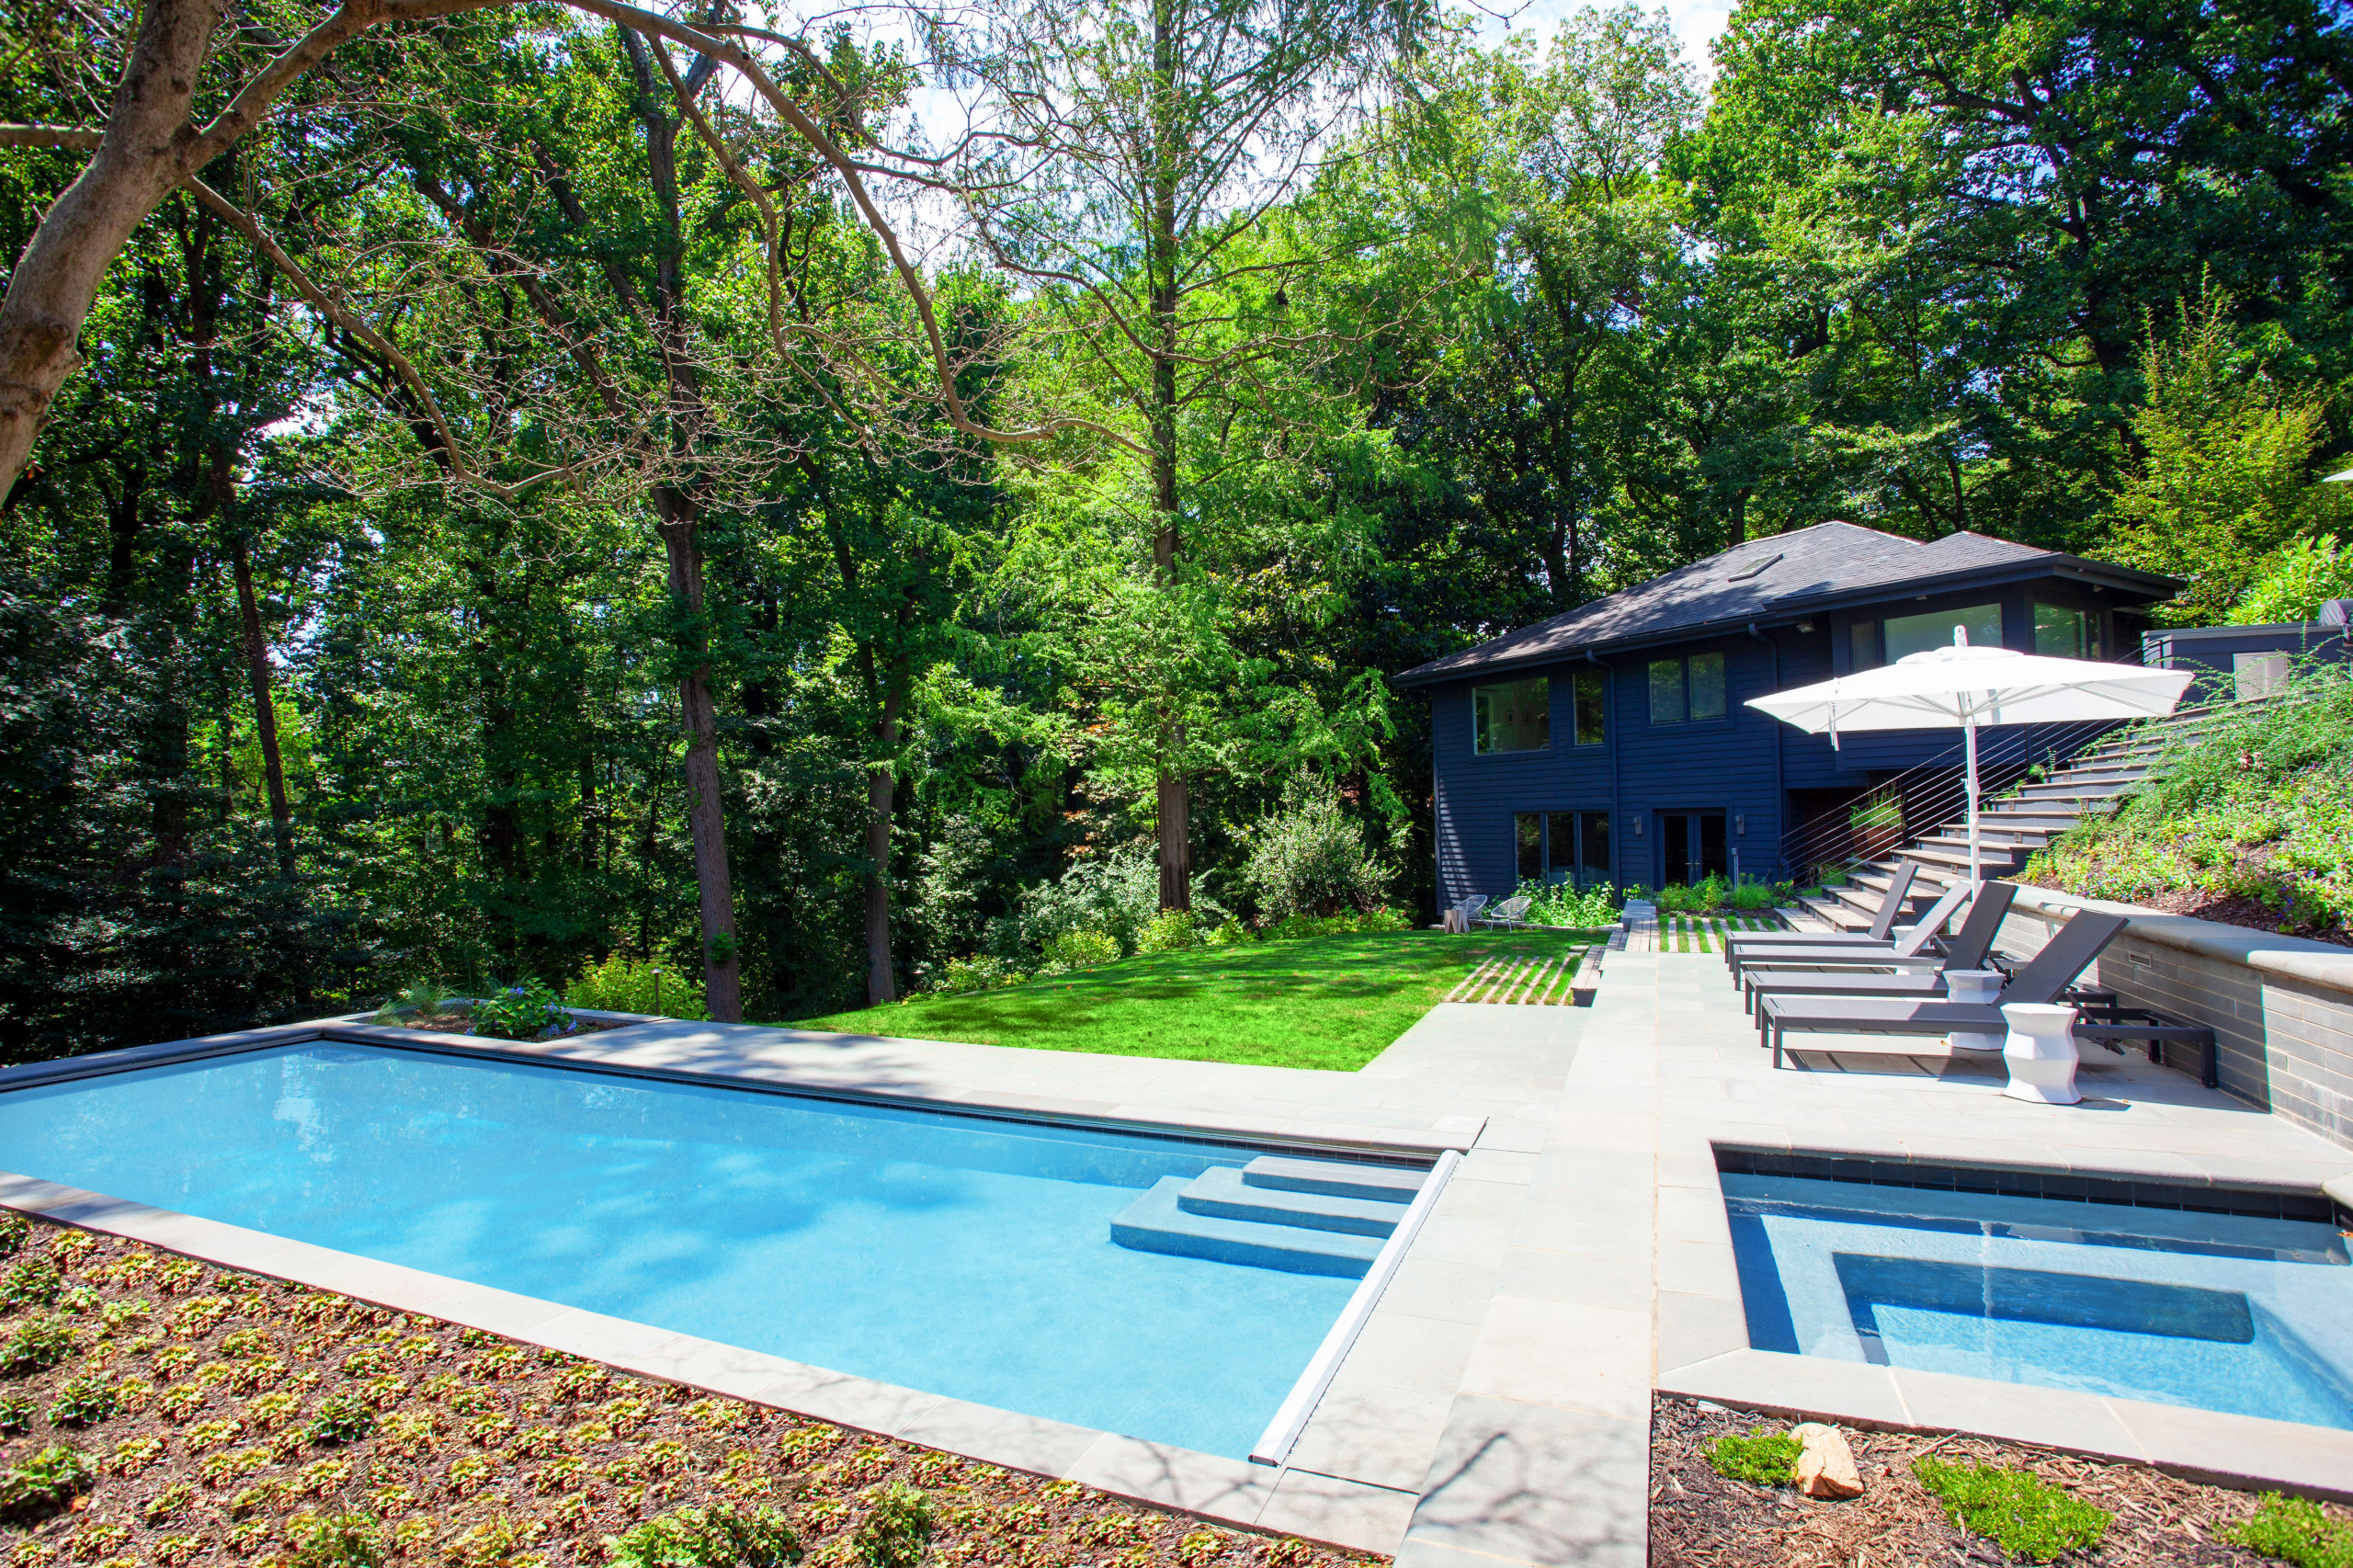 Arlington Swimming Pool and Backyard